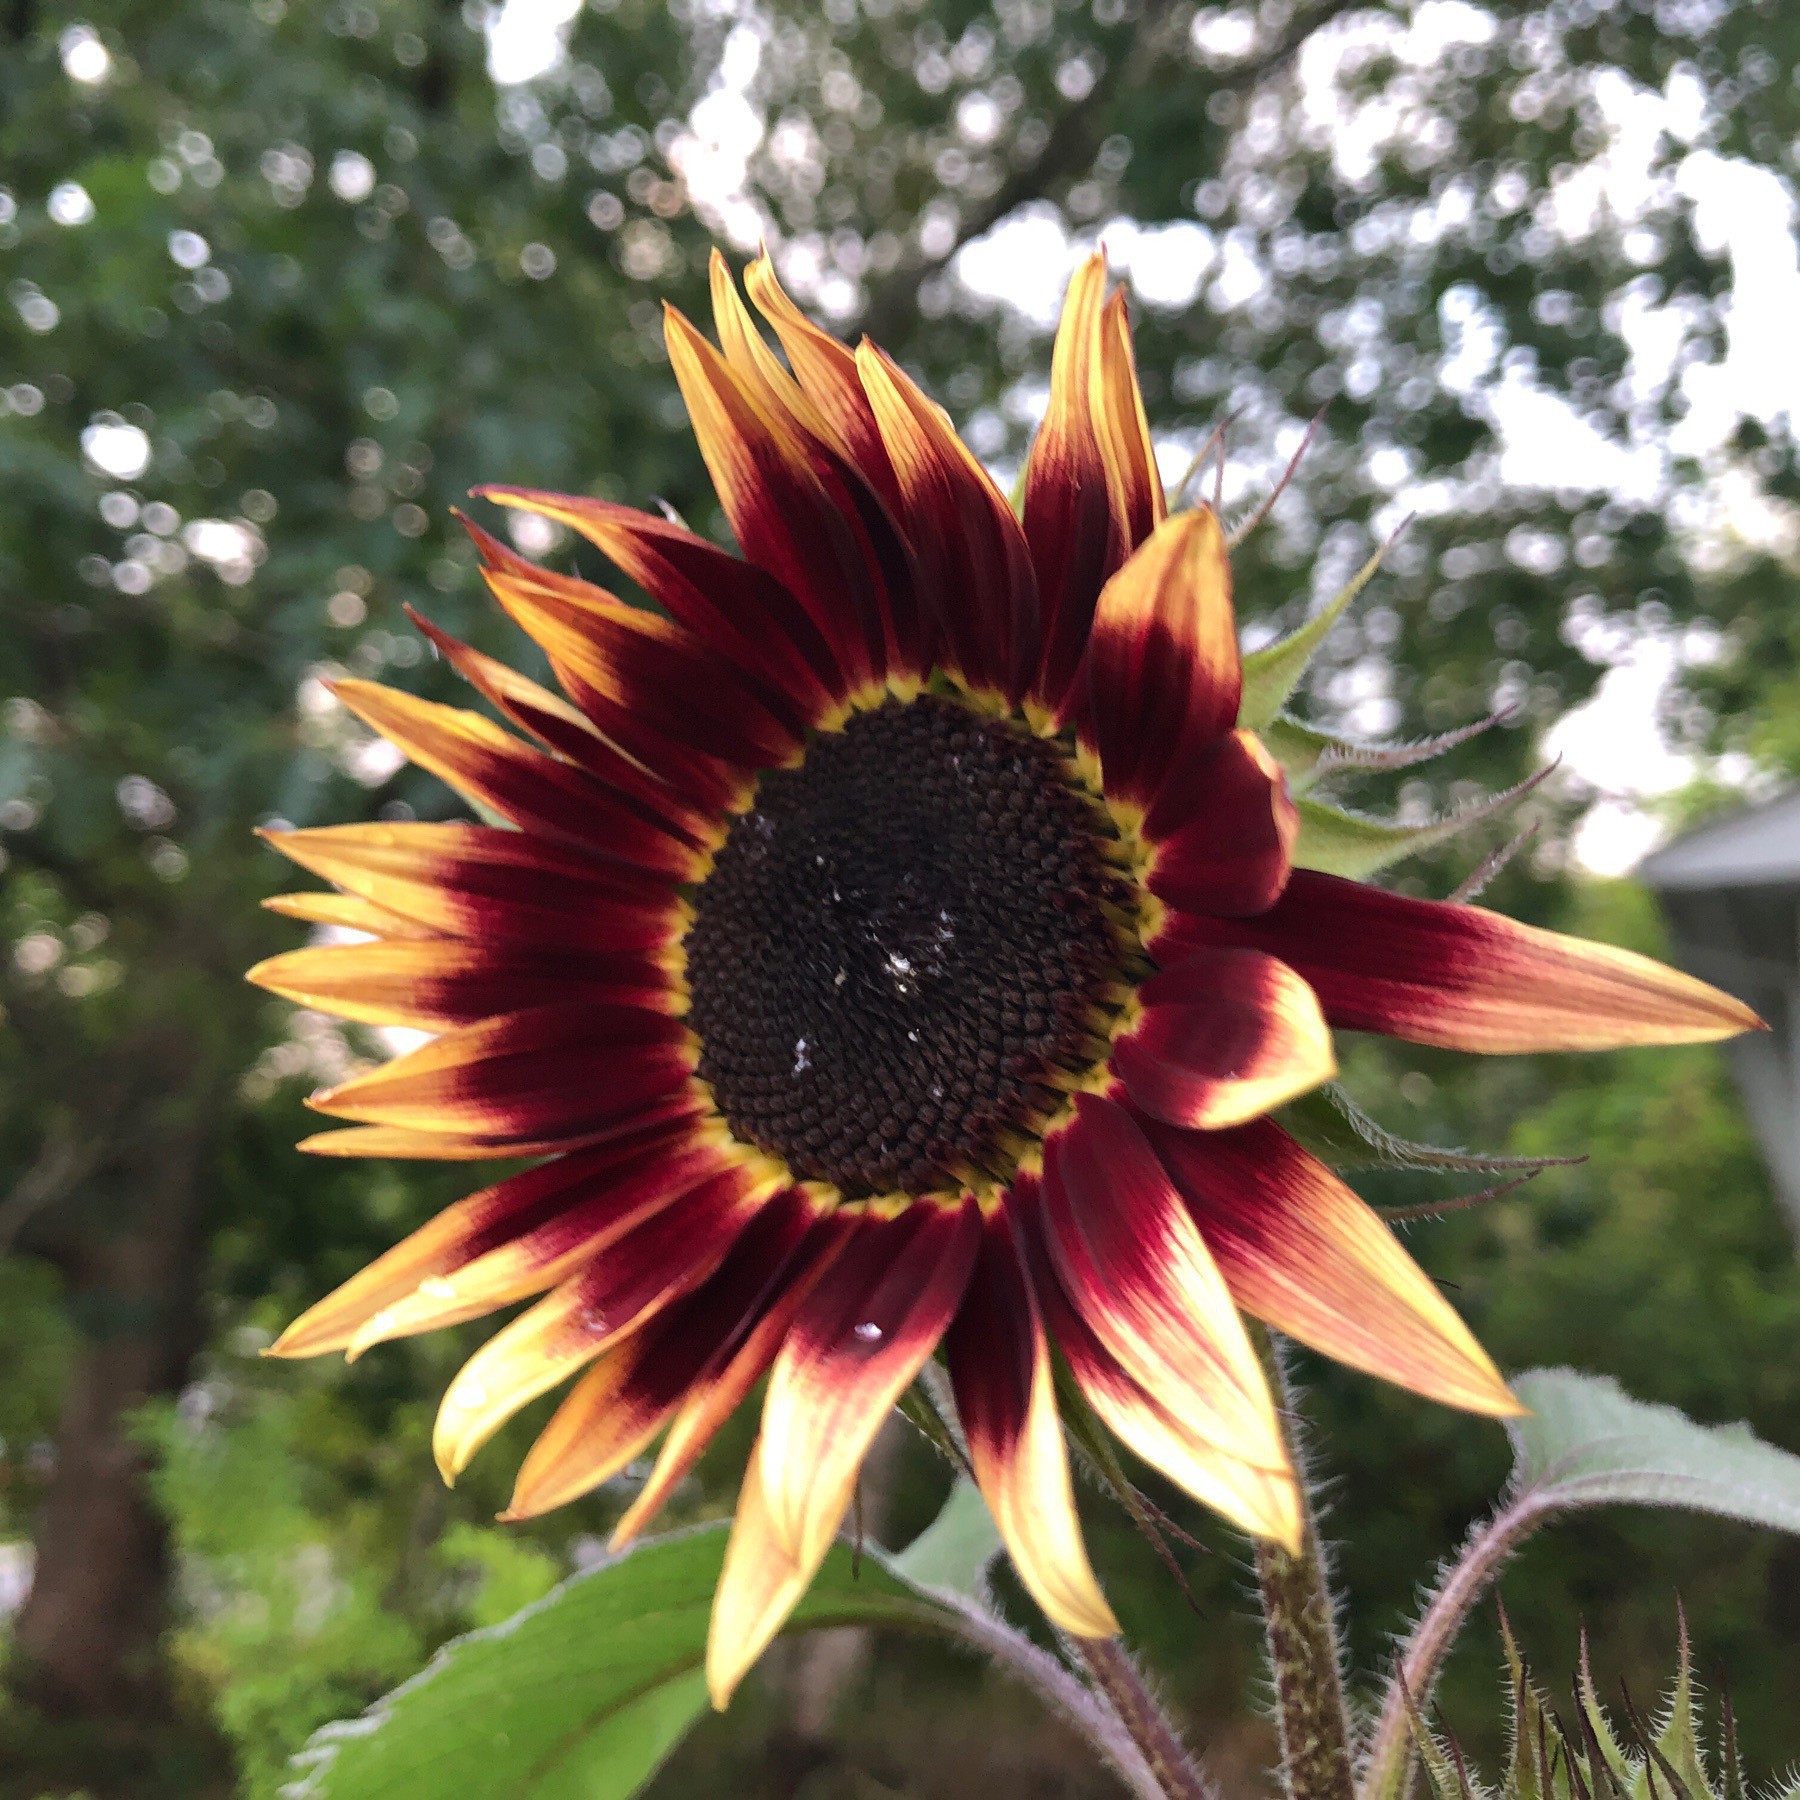 Sunflower opening.